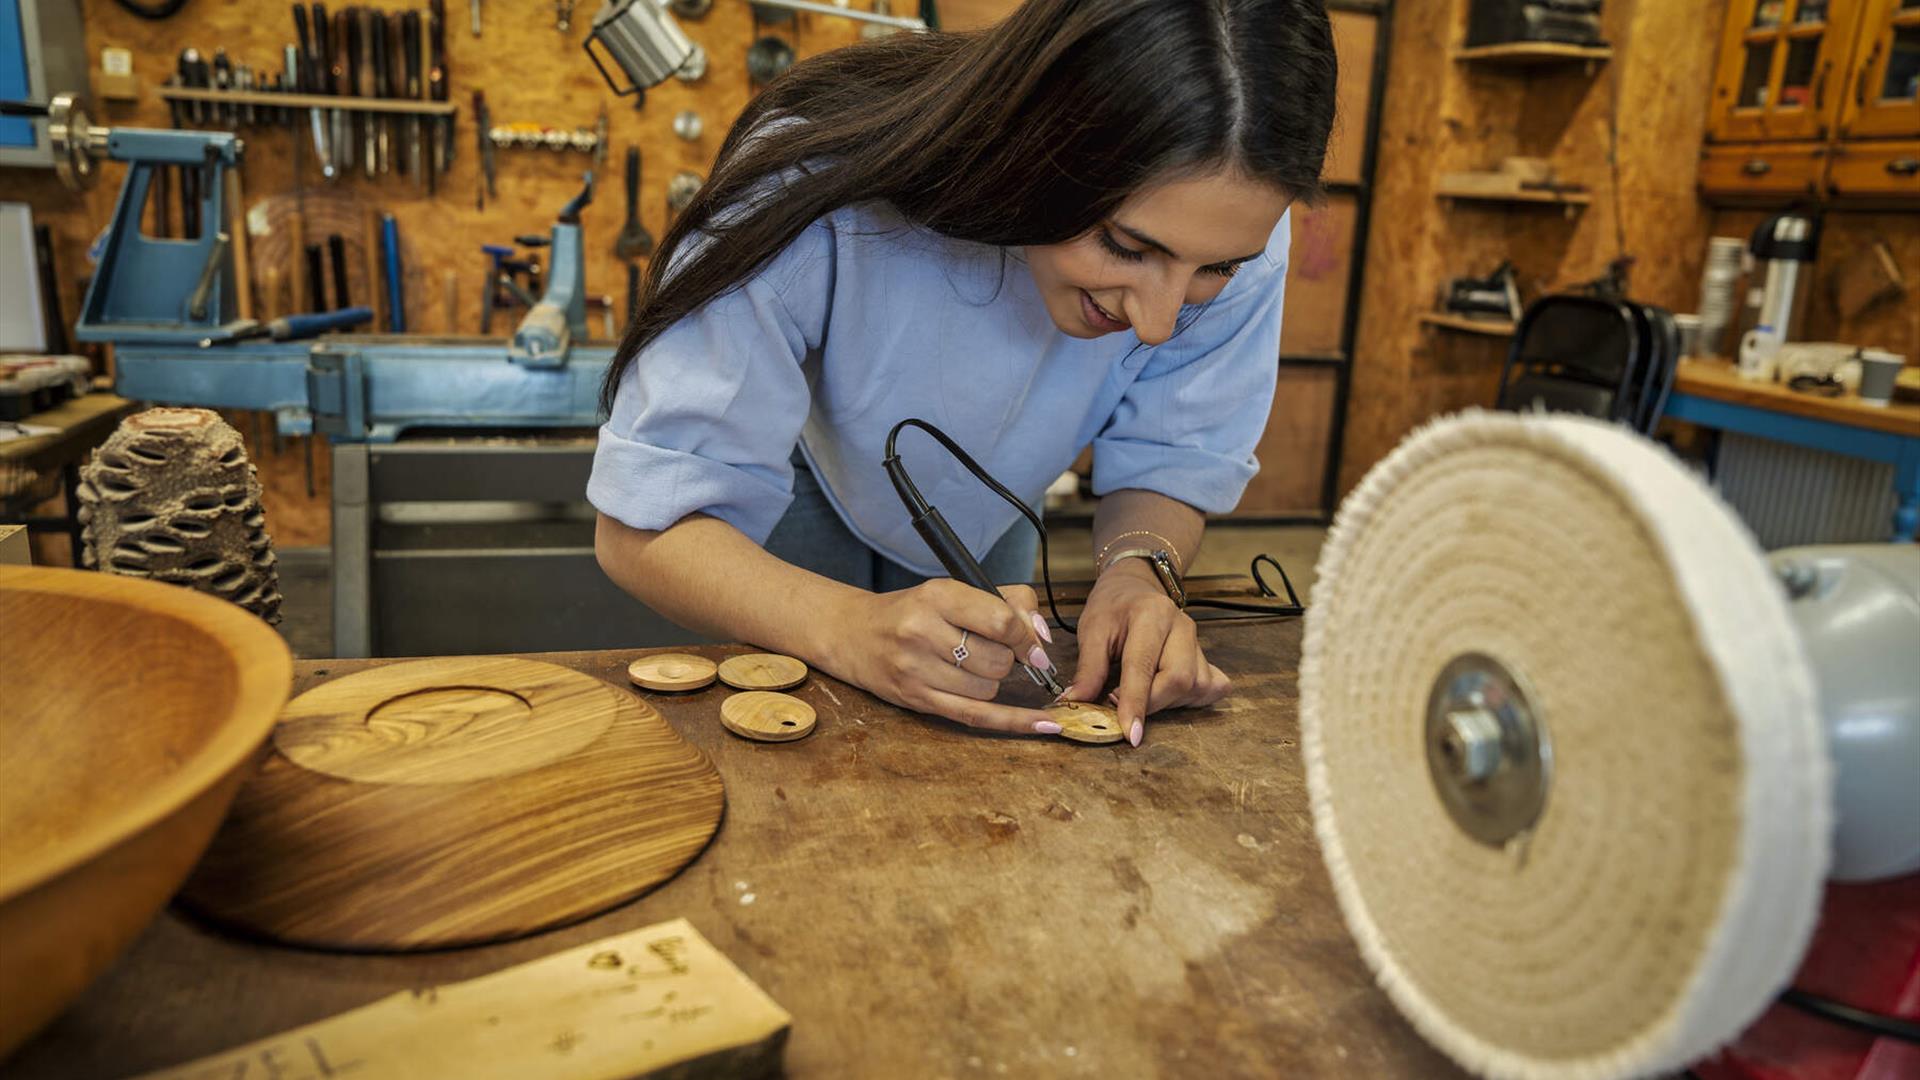 Woman starts imprinting on her handmade wooden pendant